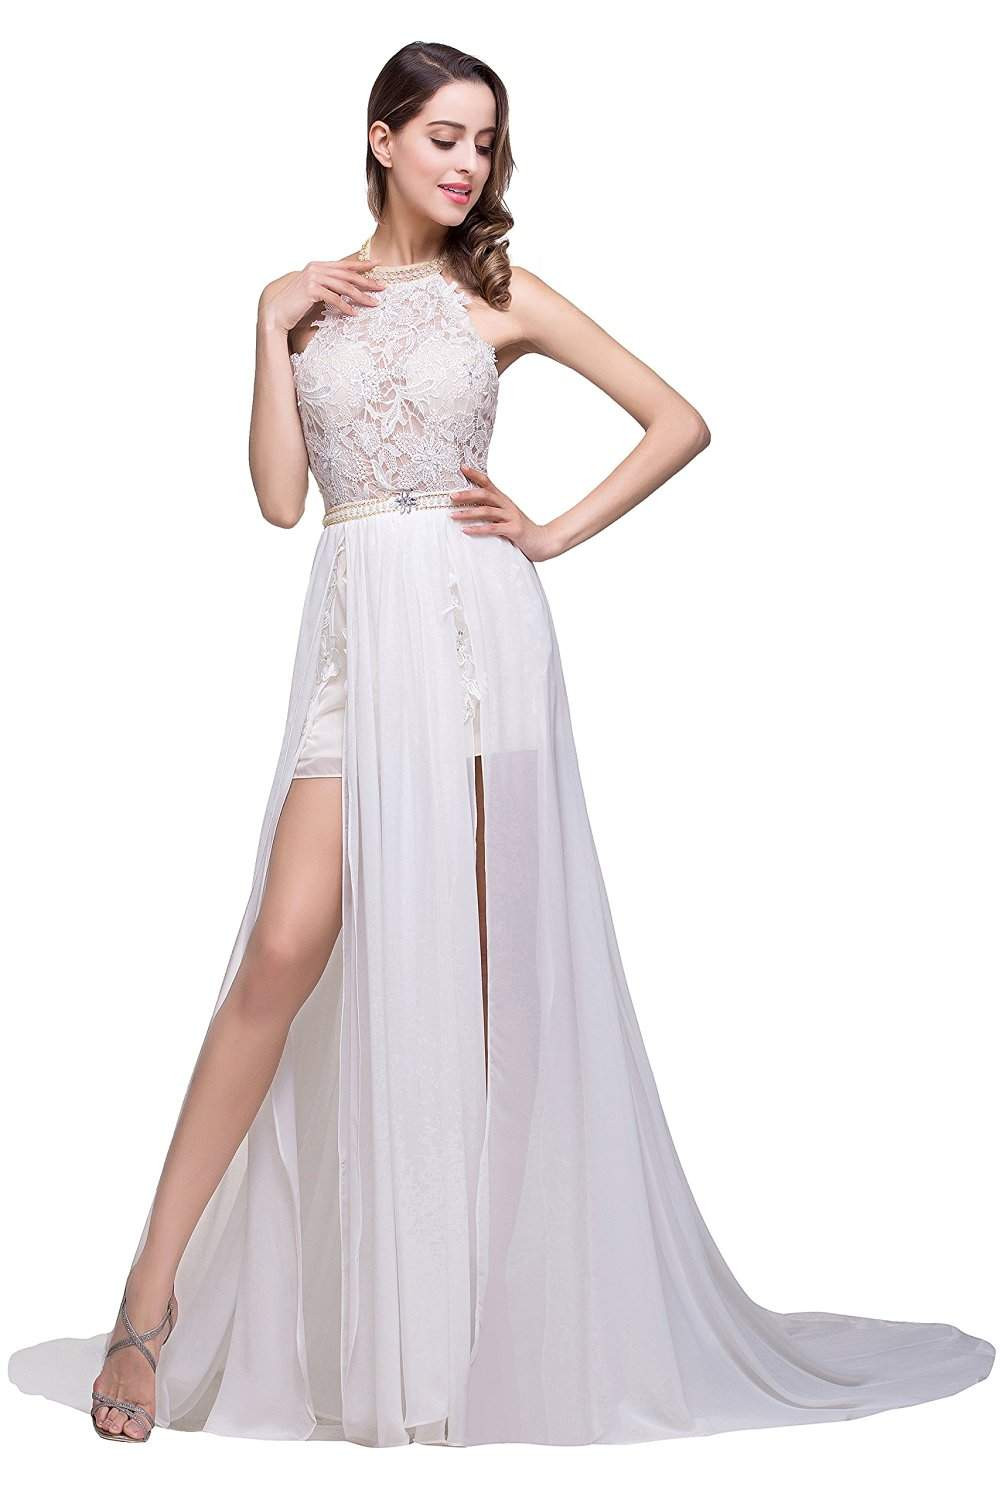 Discount Wedding Dresses Online
 Top 50 Best Cheap Wedding Dresses pare Buy & Save